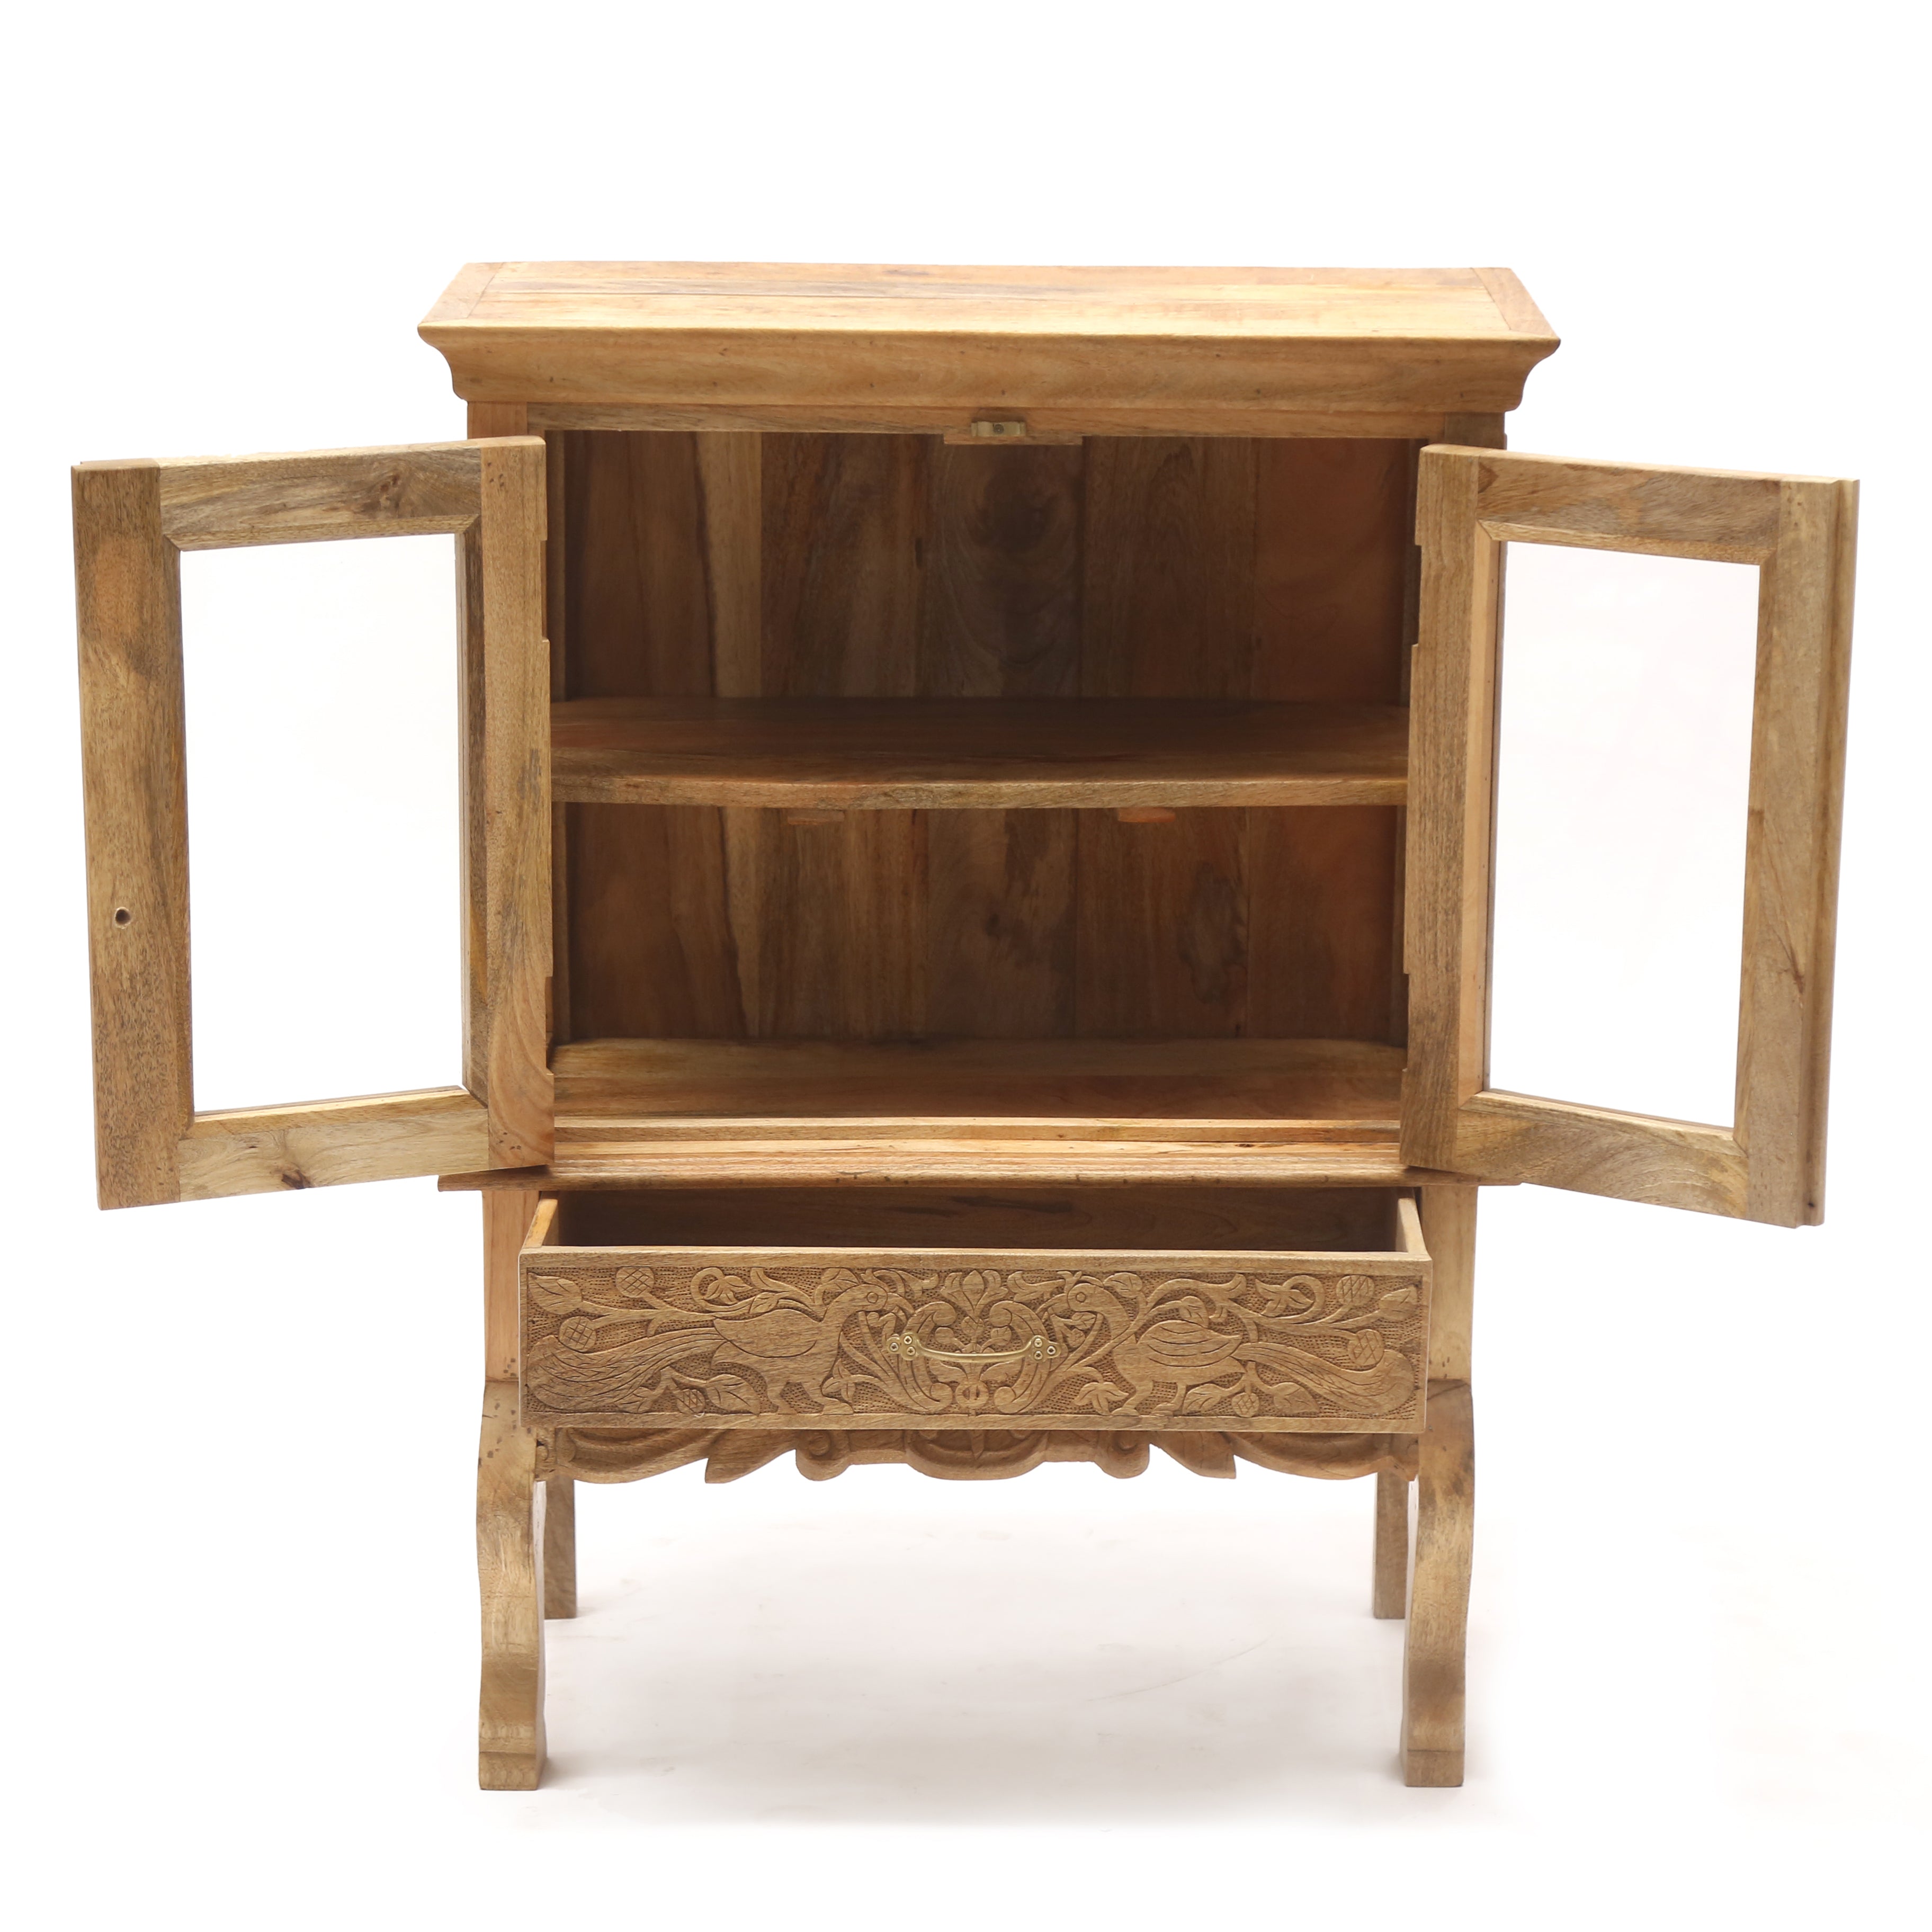 Intricate Designed Wooden Cabinet Cupboard